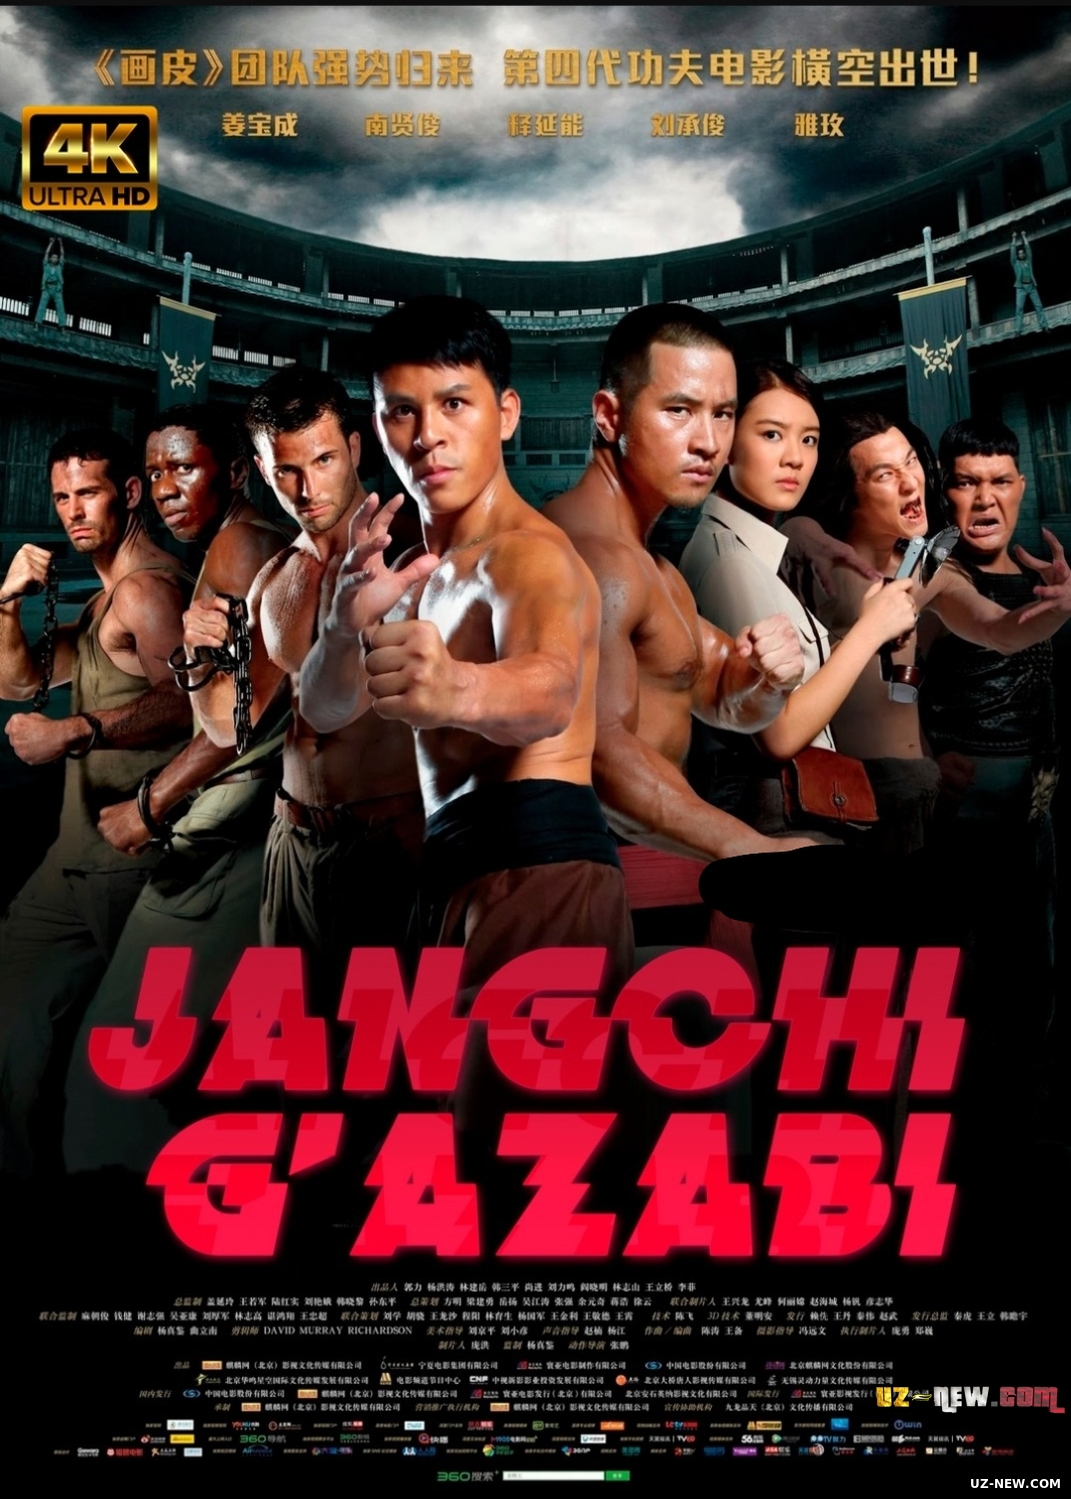 Jangchi g'azabi / Vajraning g'azabi Xitoy boyevik filmi Uzbek tilida (2014)